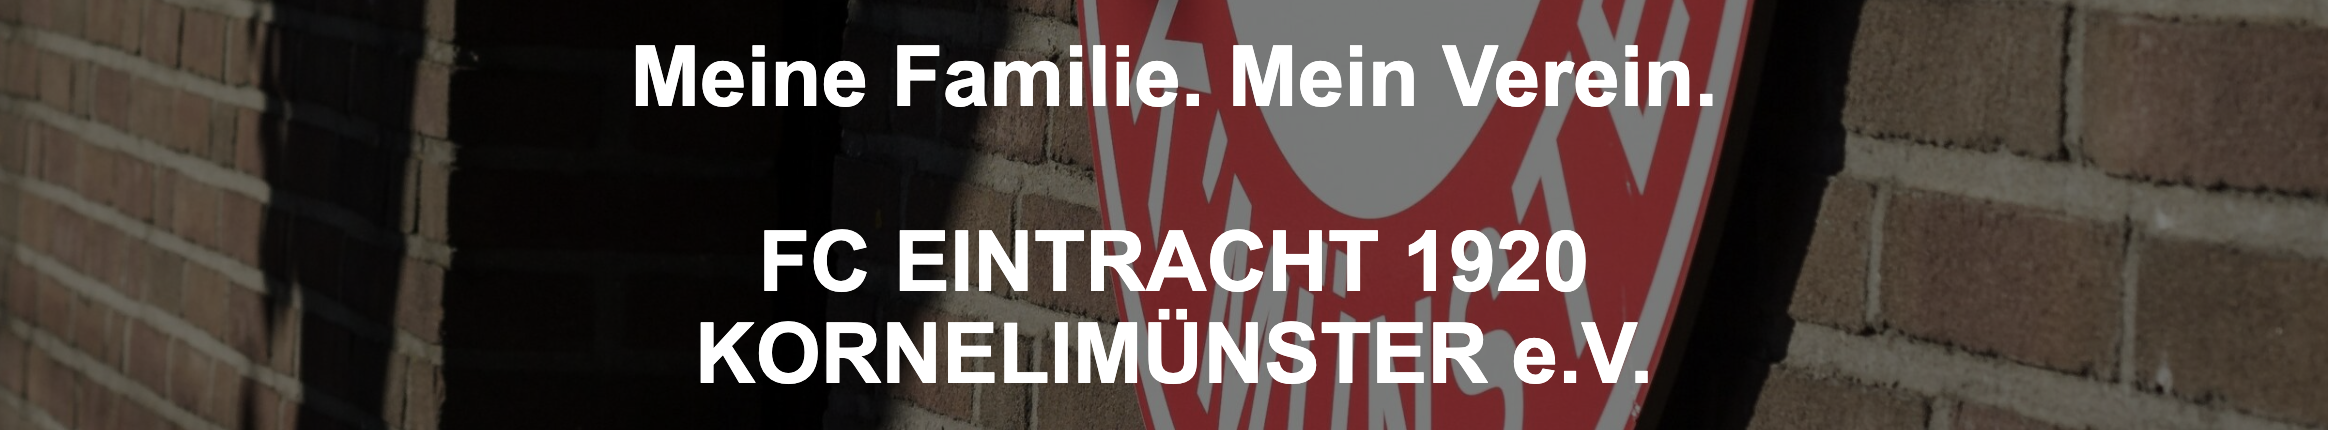 FC Eintracht Kornelimünster Title Image